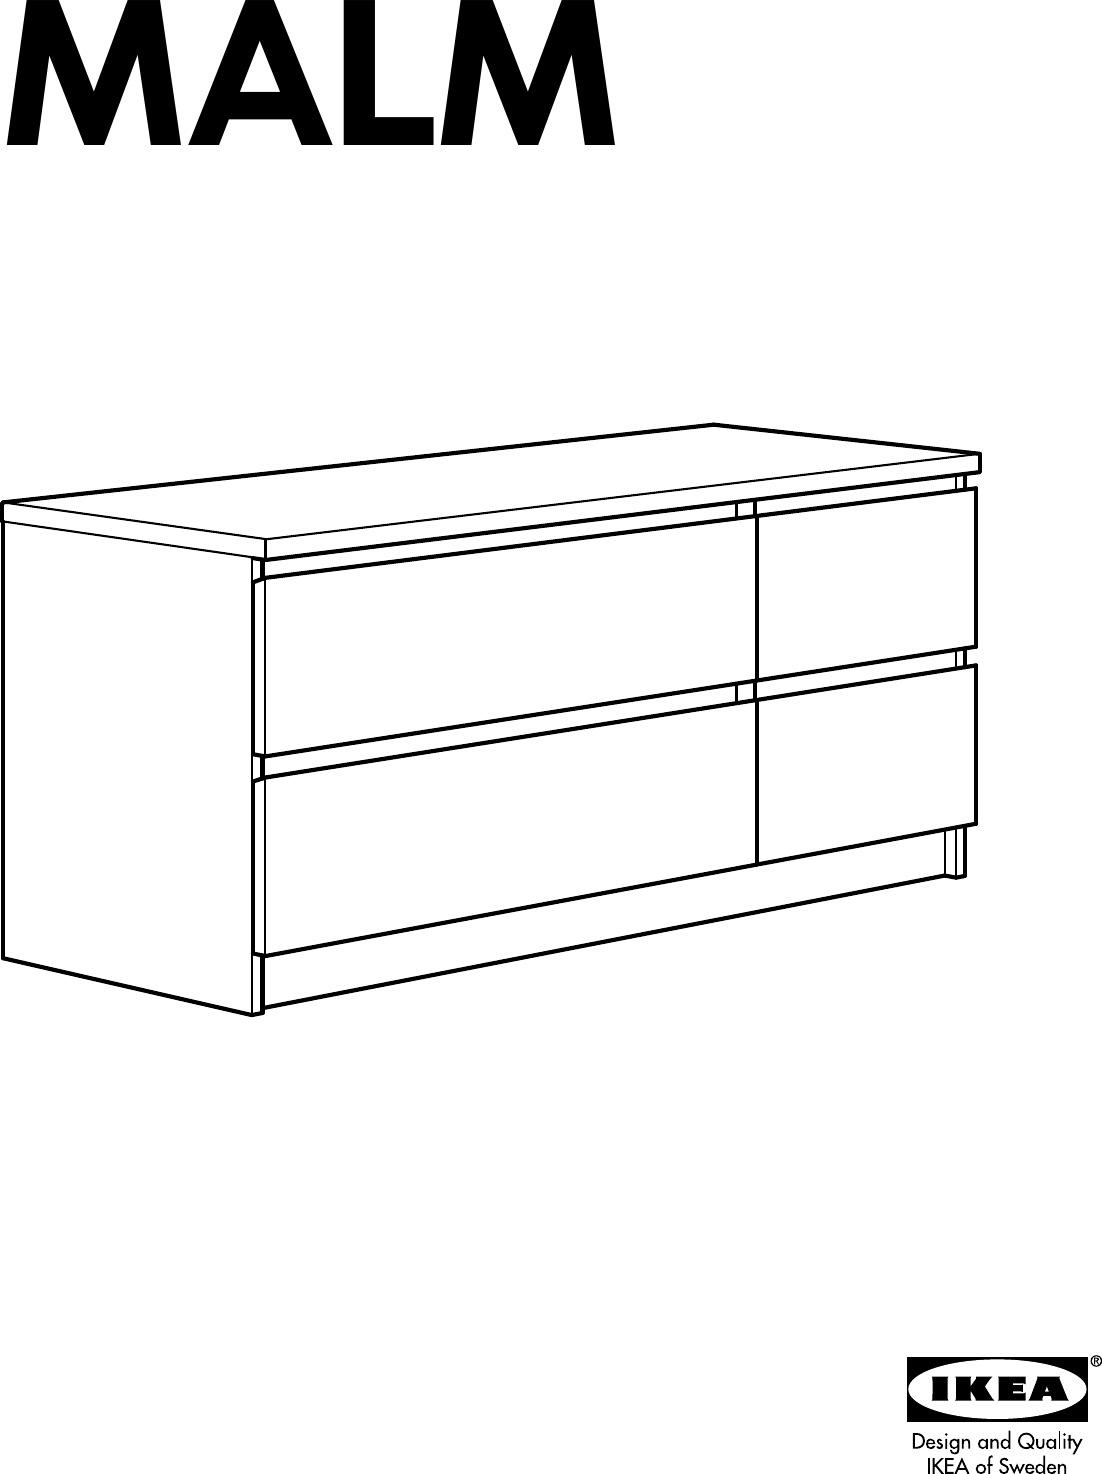 Ikea Malm 4 Drawer Dresser Instructions Pdf Test 4